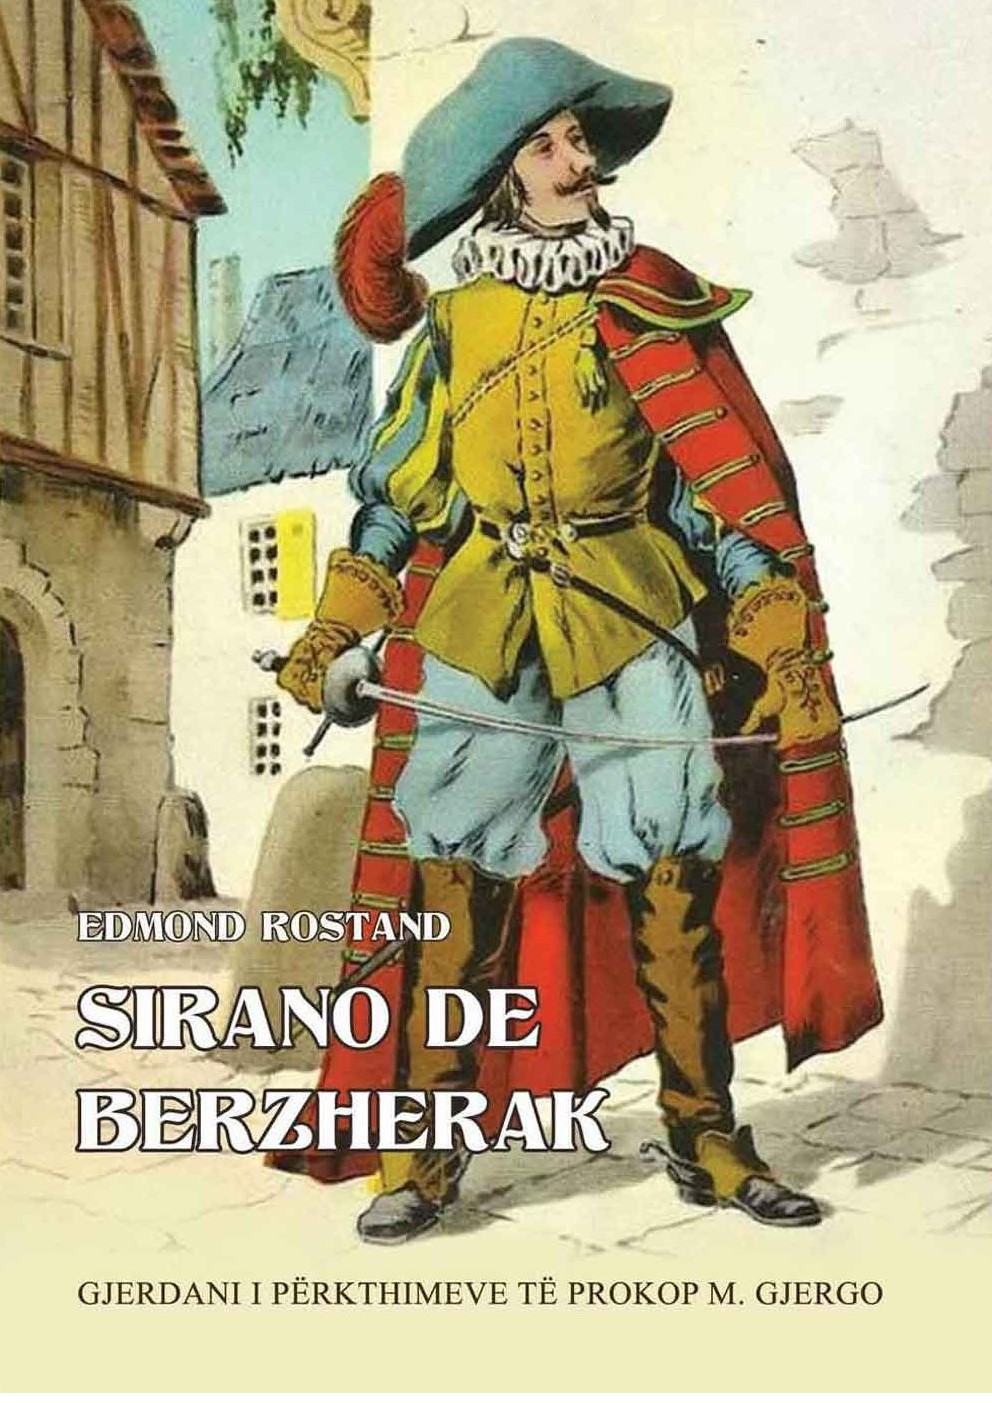 Sirano de Berzherak